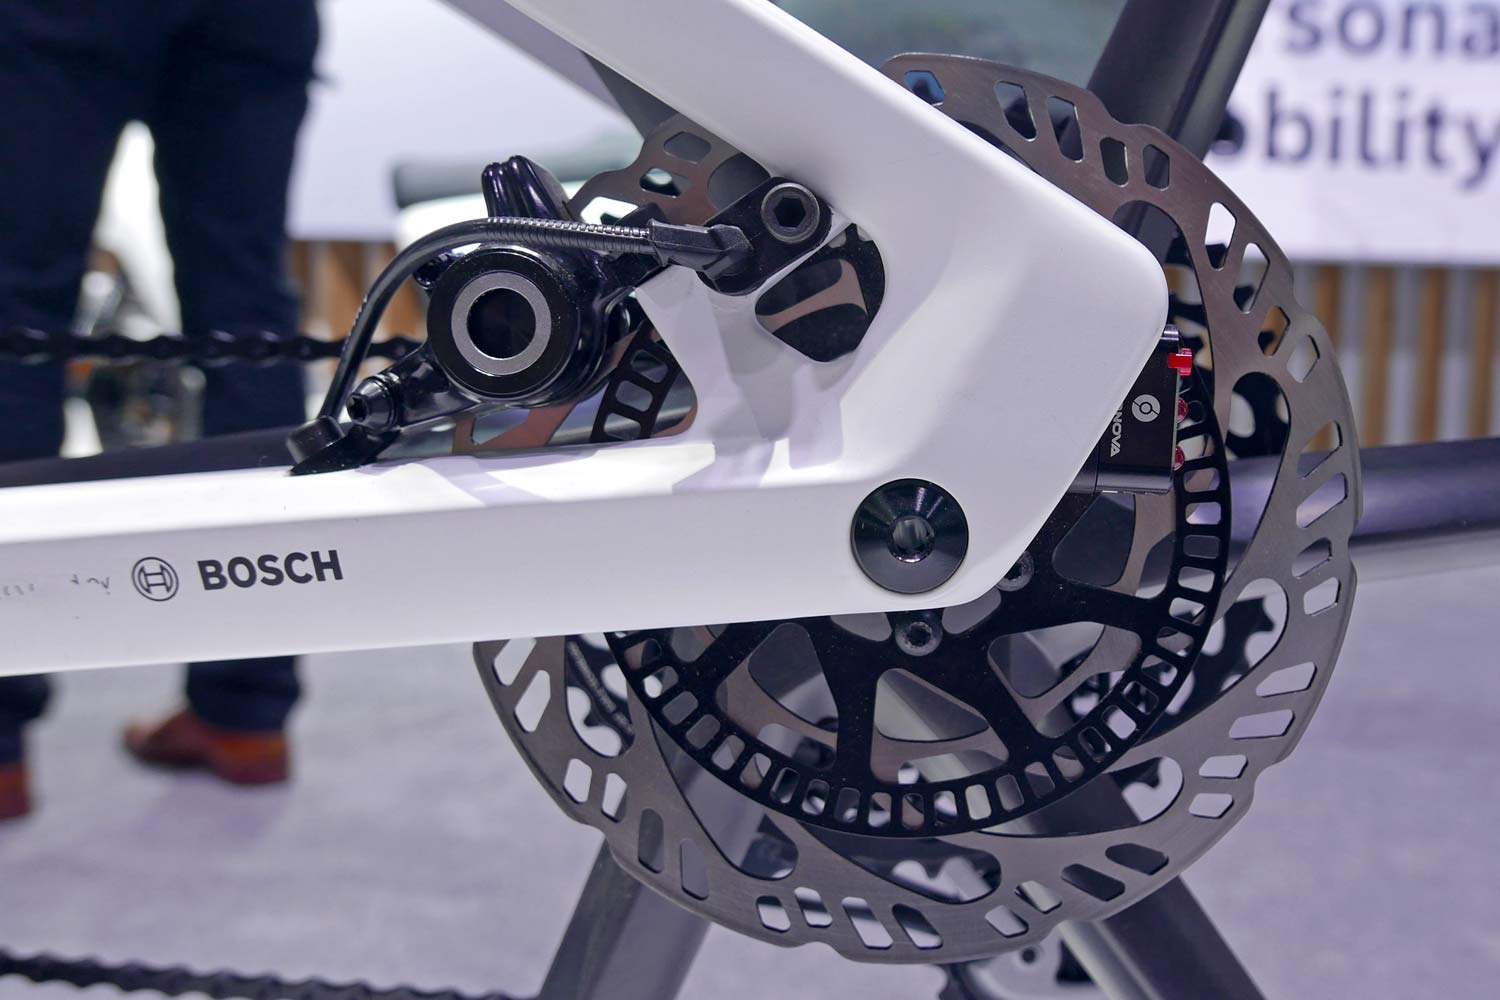 Bosch eBike ABS prototype e-bike with integrated anti-lock braking, rear brake